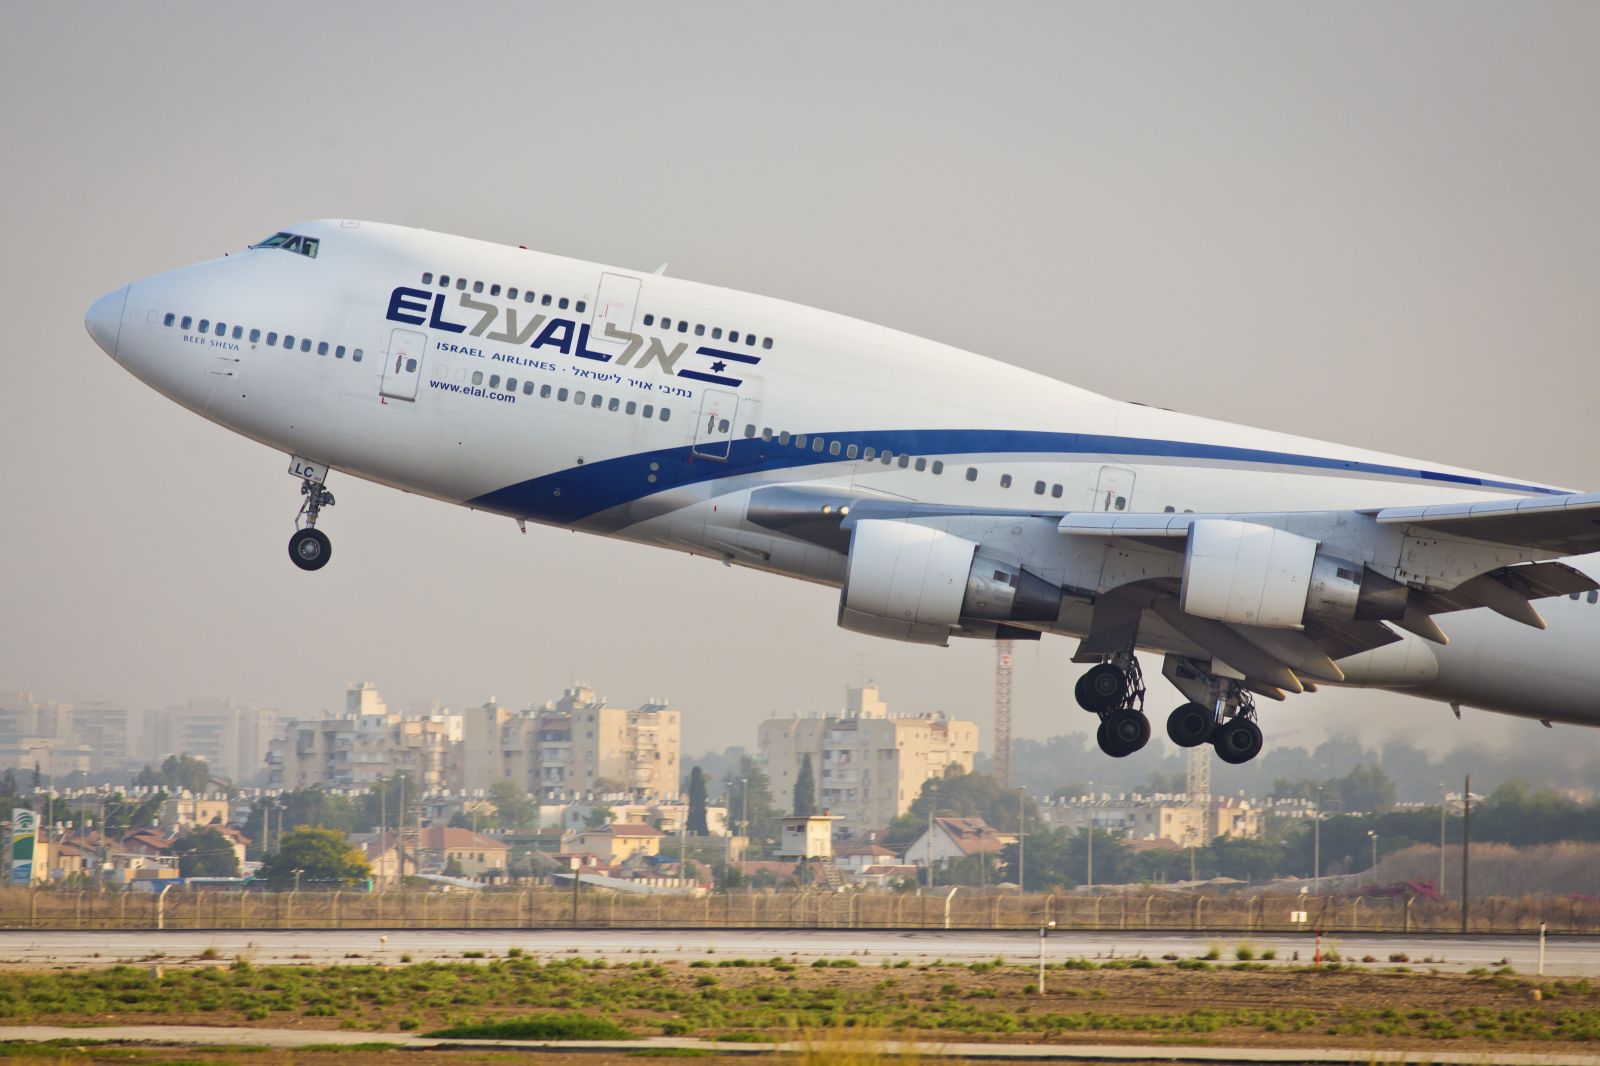 El al israel. Израильские авиалинии Эль Аль. El al Israel Airlines самолеты. Израильской авиакомпанией el al(«Эль-Аль»). Авиабилеты израильские авиалинии.